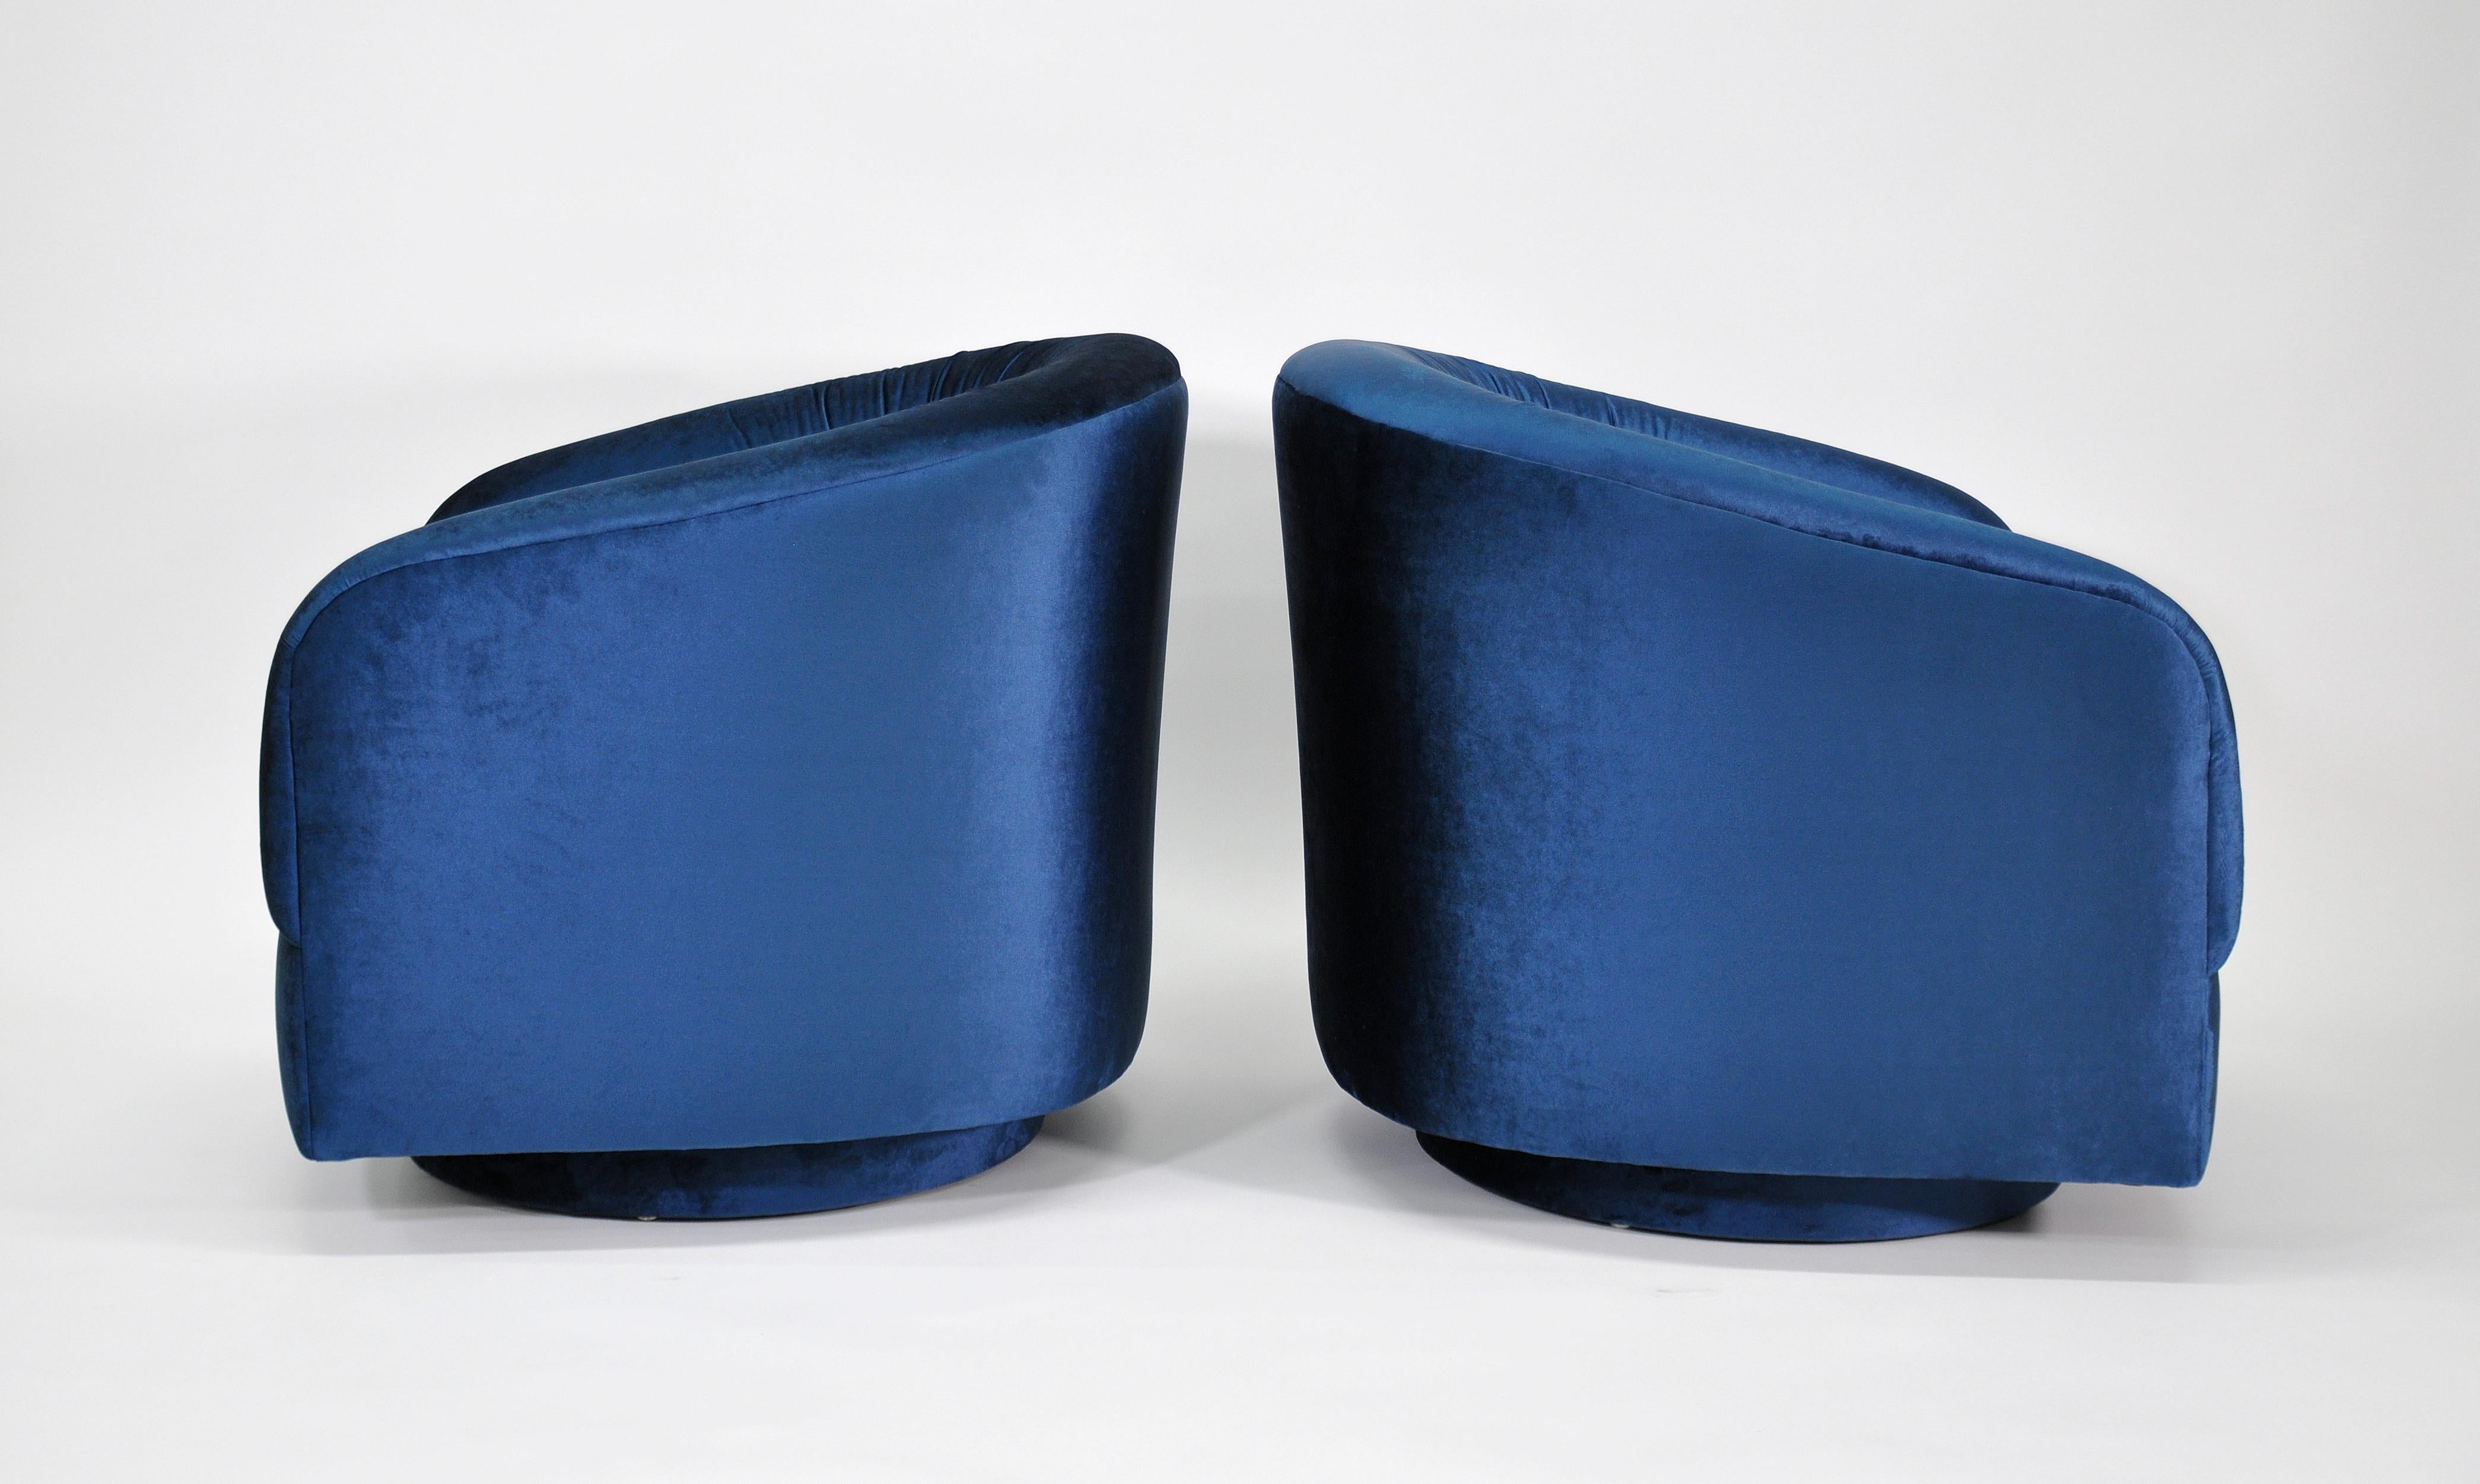 swivel chairs blue